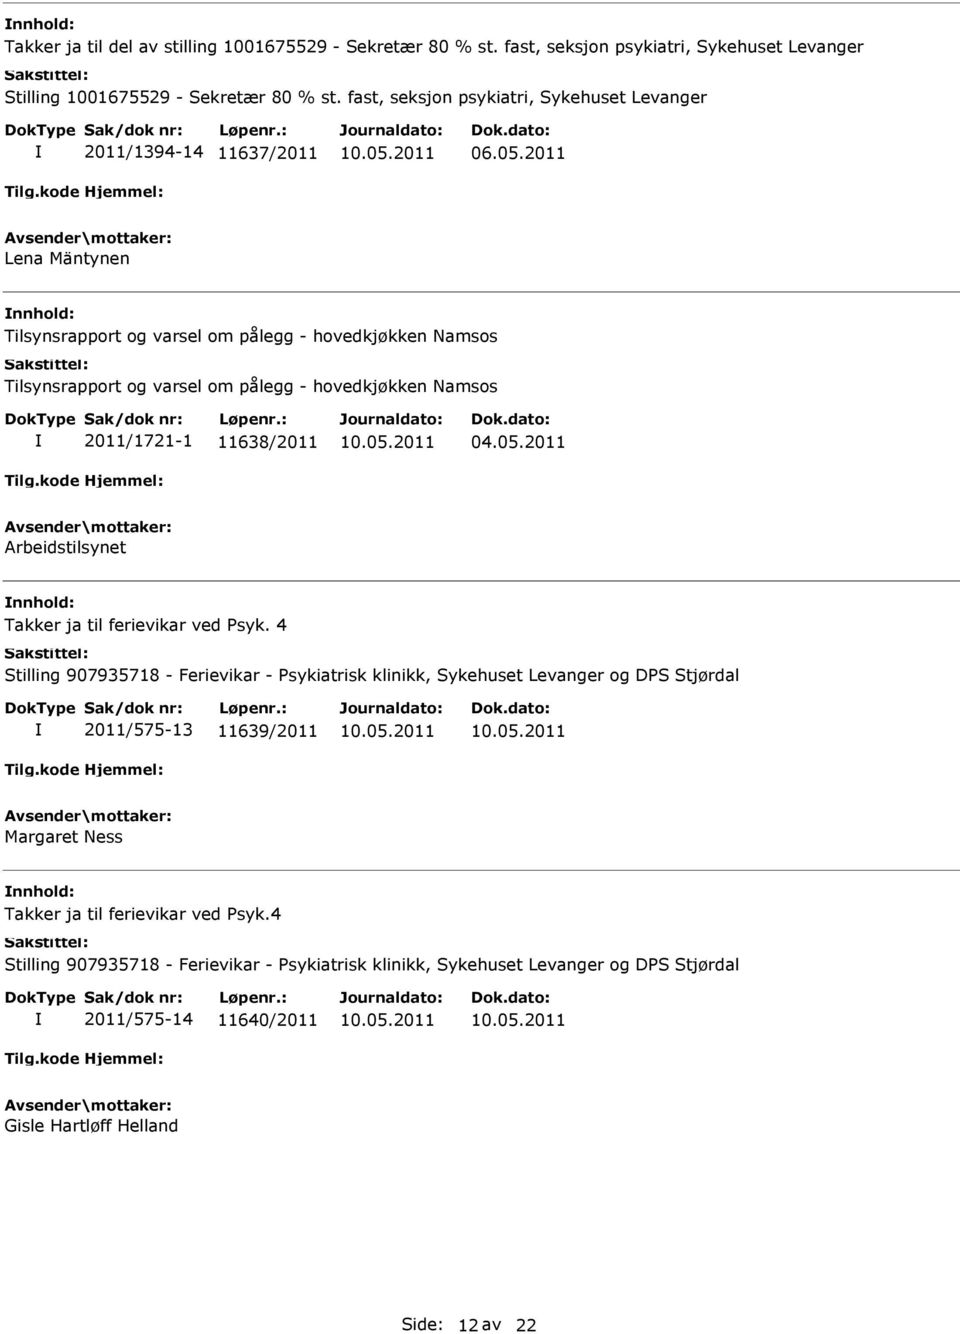 2011 Lena Mäntynen Tilsynsrapport og varsel om pålegg - hovedkjøkken Namsos Tilsynsrapport og varsel om pålegg - hovedkjøkken Namsos 2011/1721-1 11638/2011 Arbeidstilsynet Takker ja